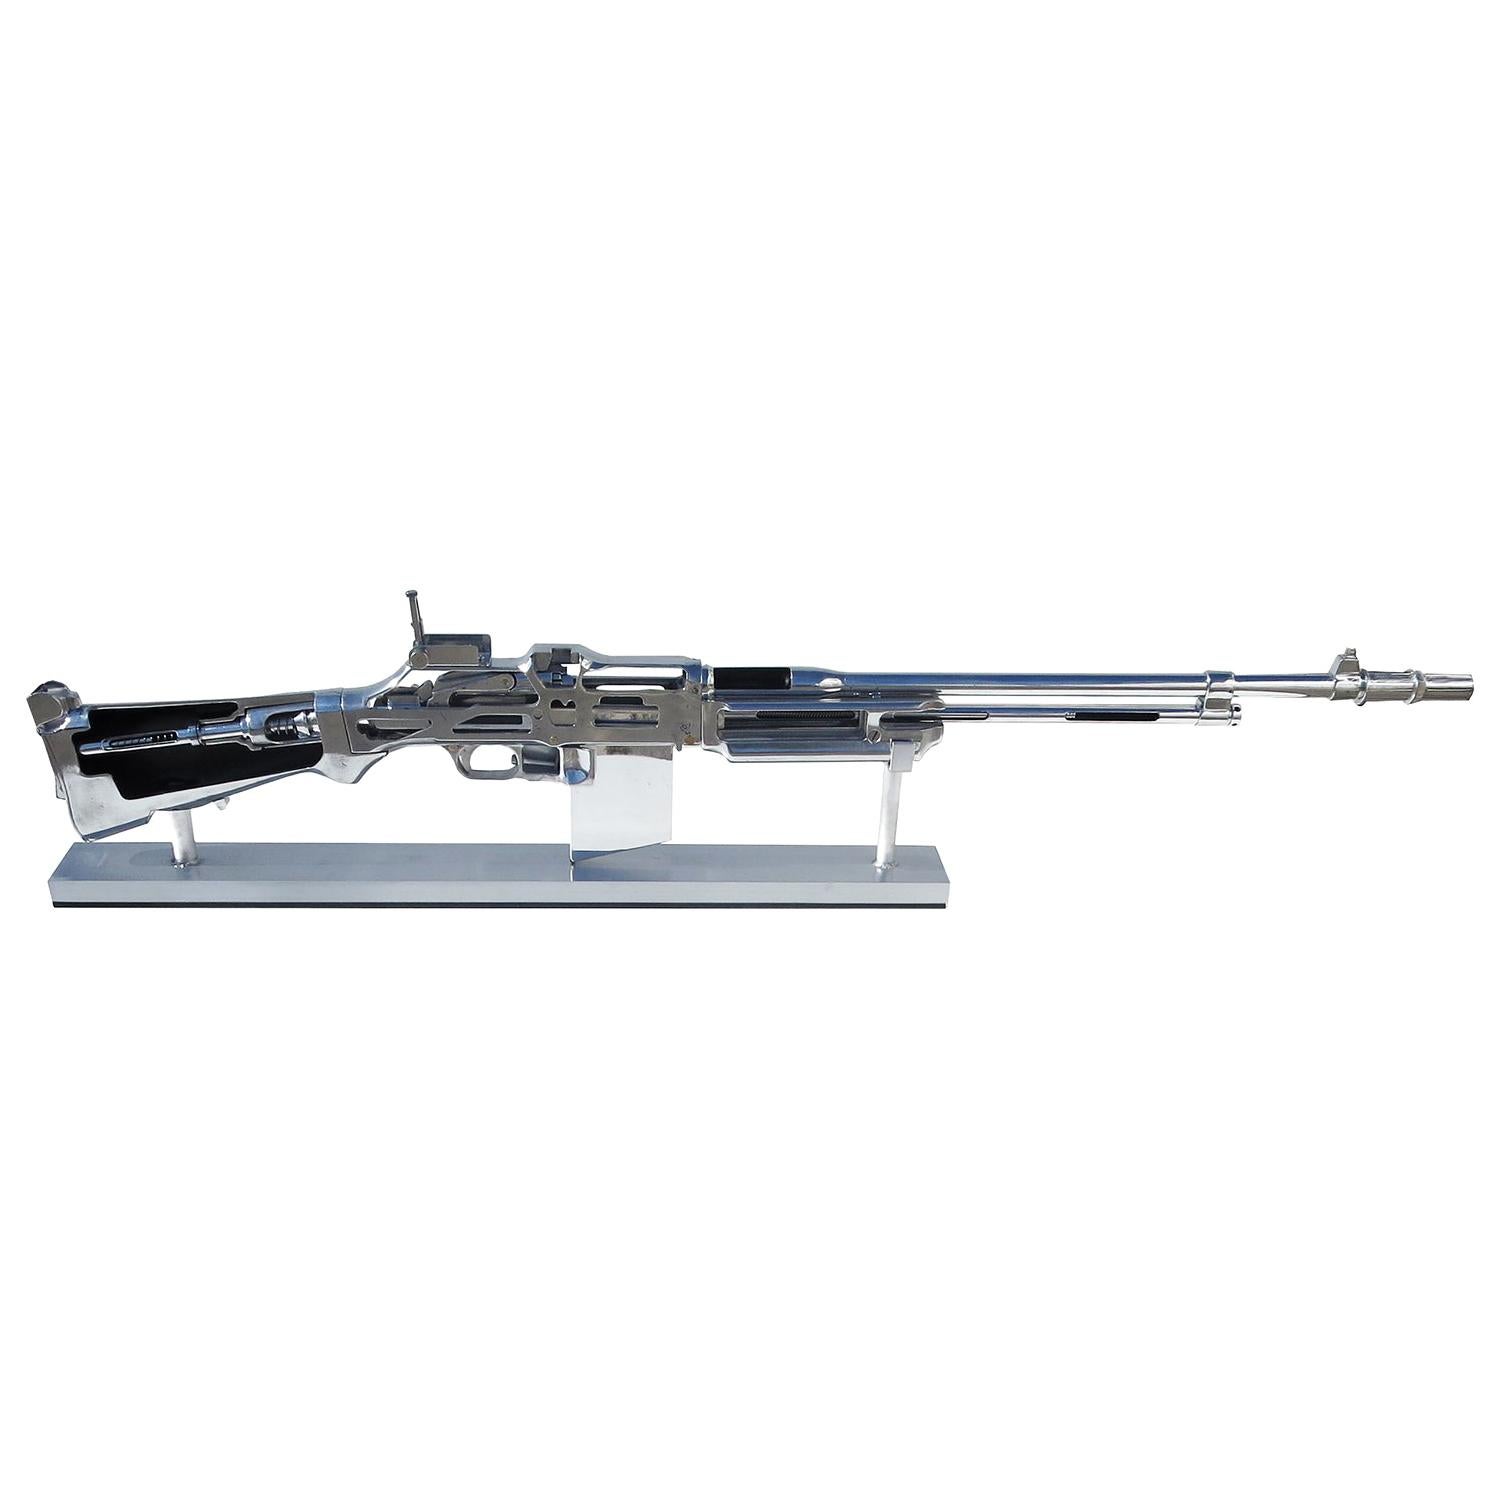 B. A. R. Rifle Display Oversized Training Gun Model